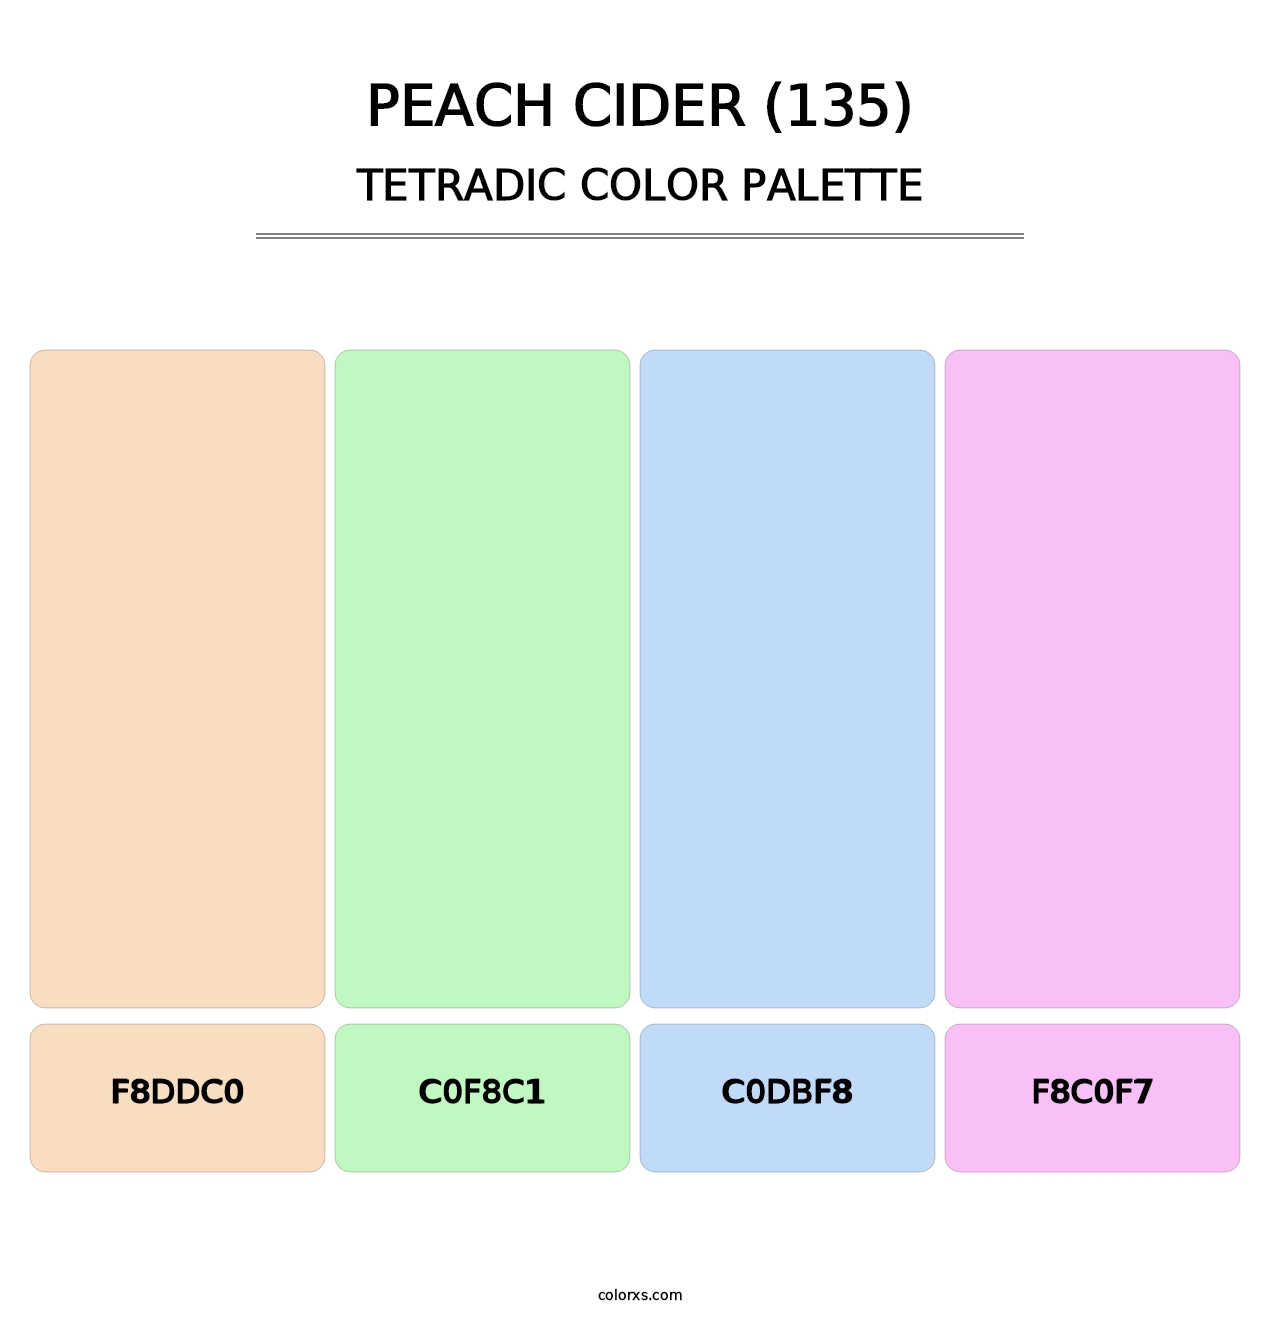 Peach Cider (135) - Tetradic Color Palette